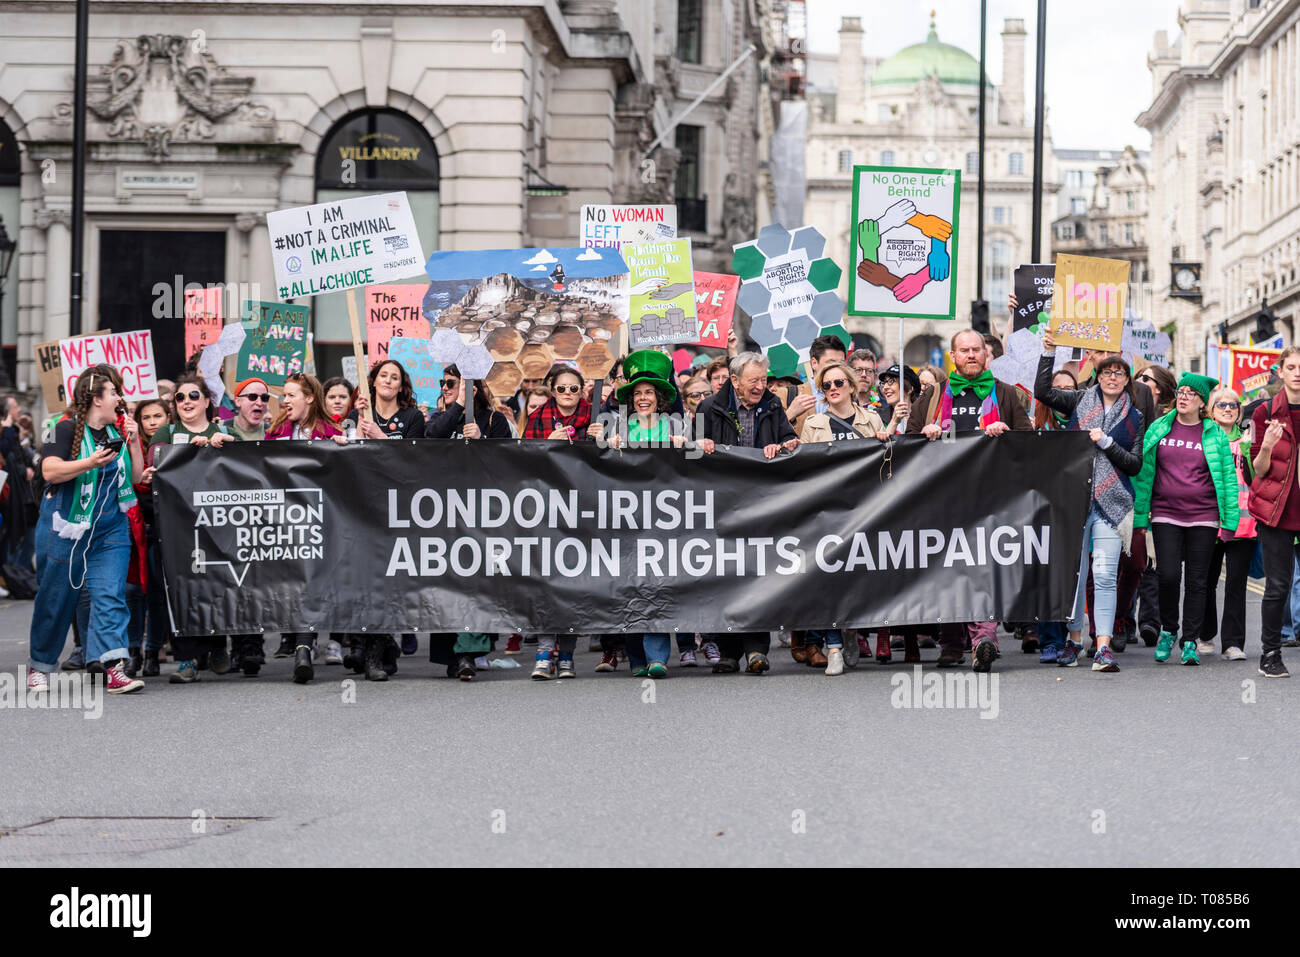 London Irish Abtreibung Rechte Kampagne Frauen an der St. Patrick's Day Parade London 2019. Demonstrieren. Banner. Plakate Stockfoto